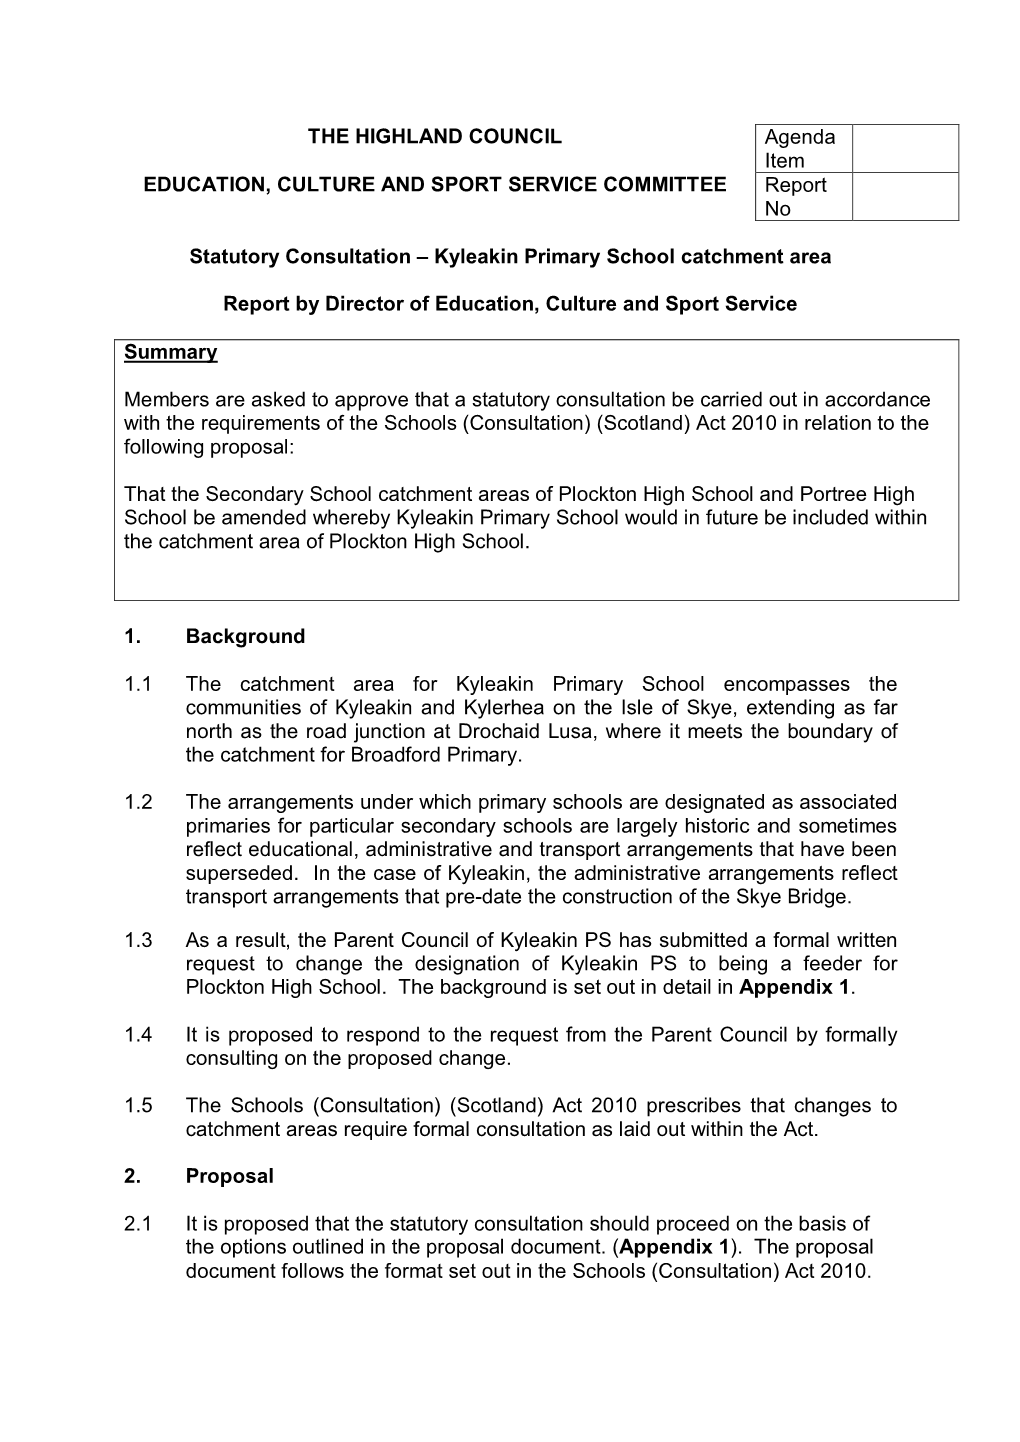 Statutory Consultation – Kyleakin Primary School Catchment Area